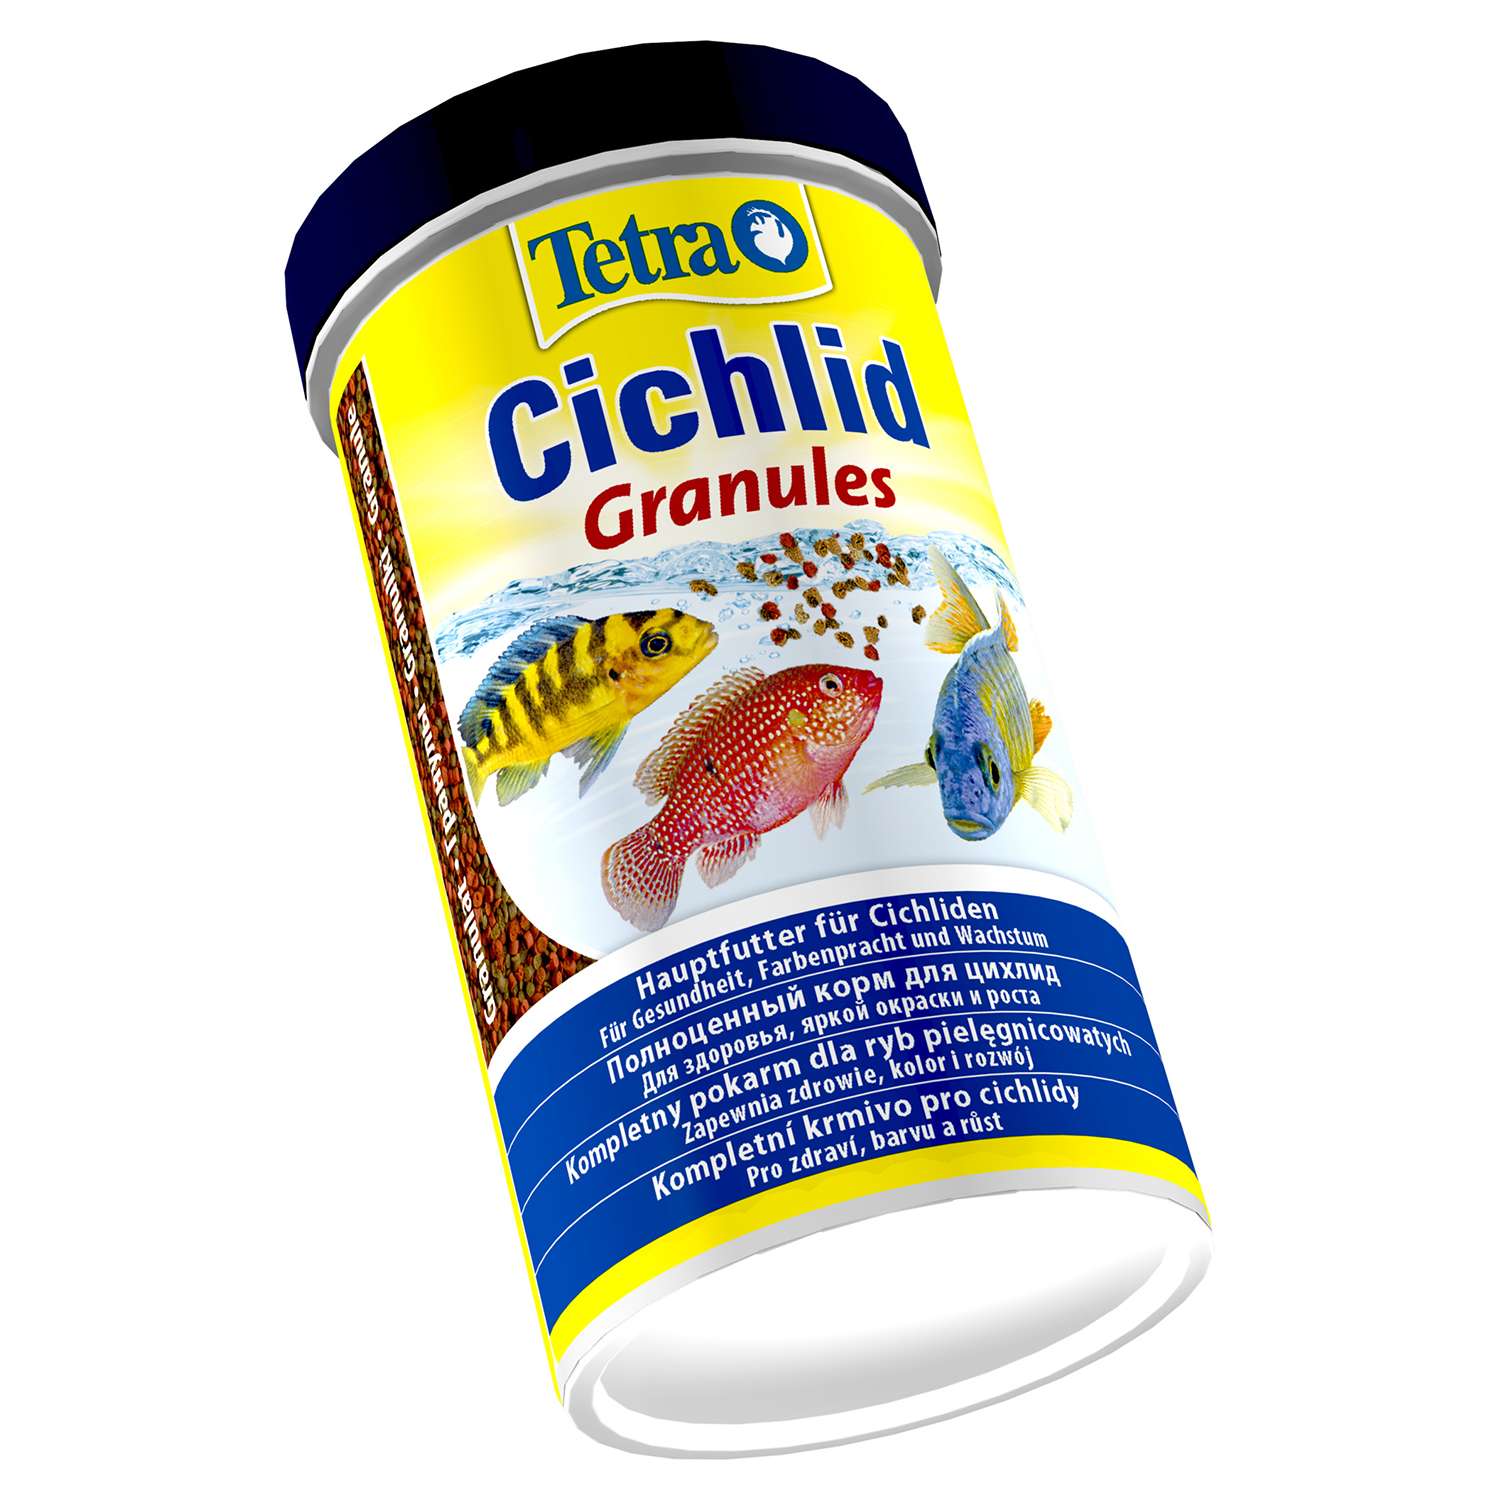 Корм дял рыб Tetra Cichlid Granules всех видов цихлид в гранулах 500мл - фото 3